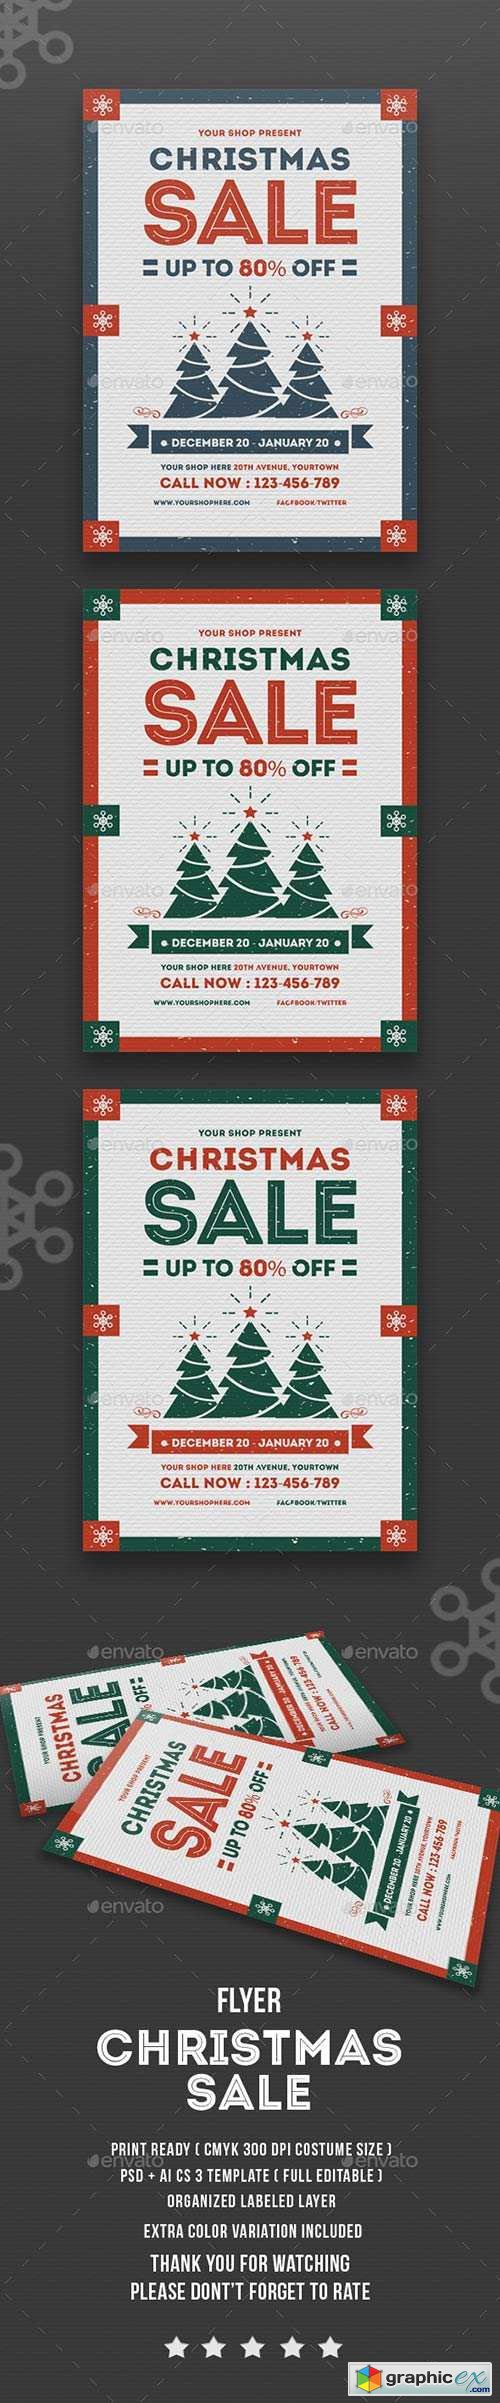 Flyer Christmas Sale